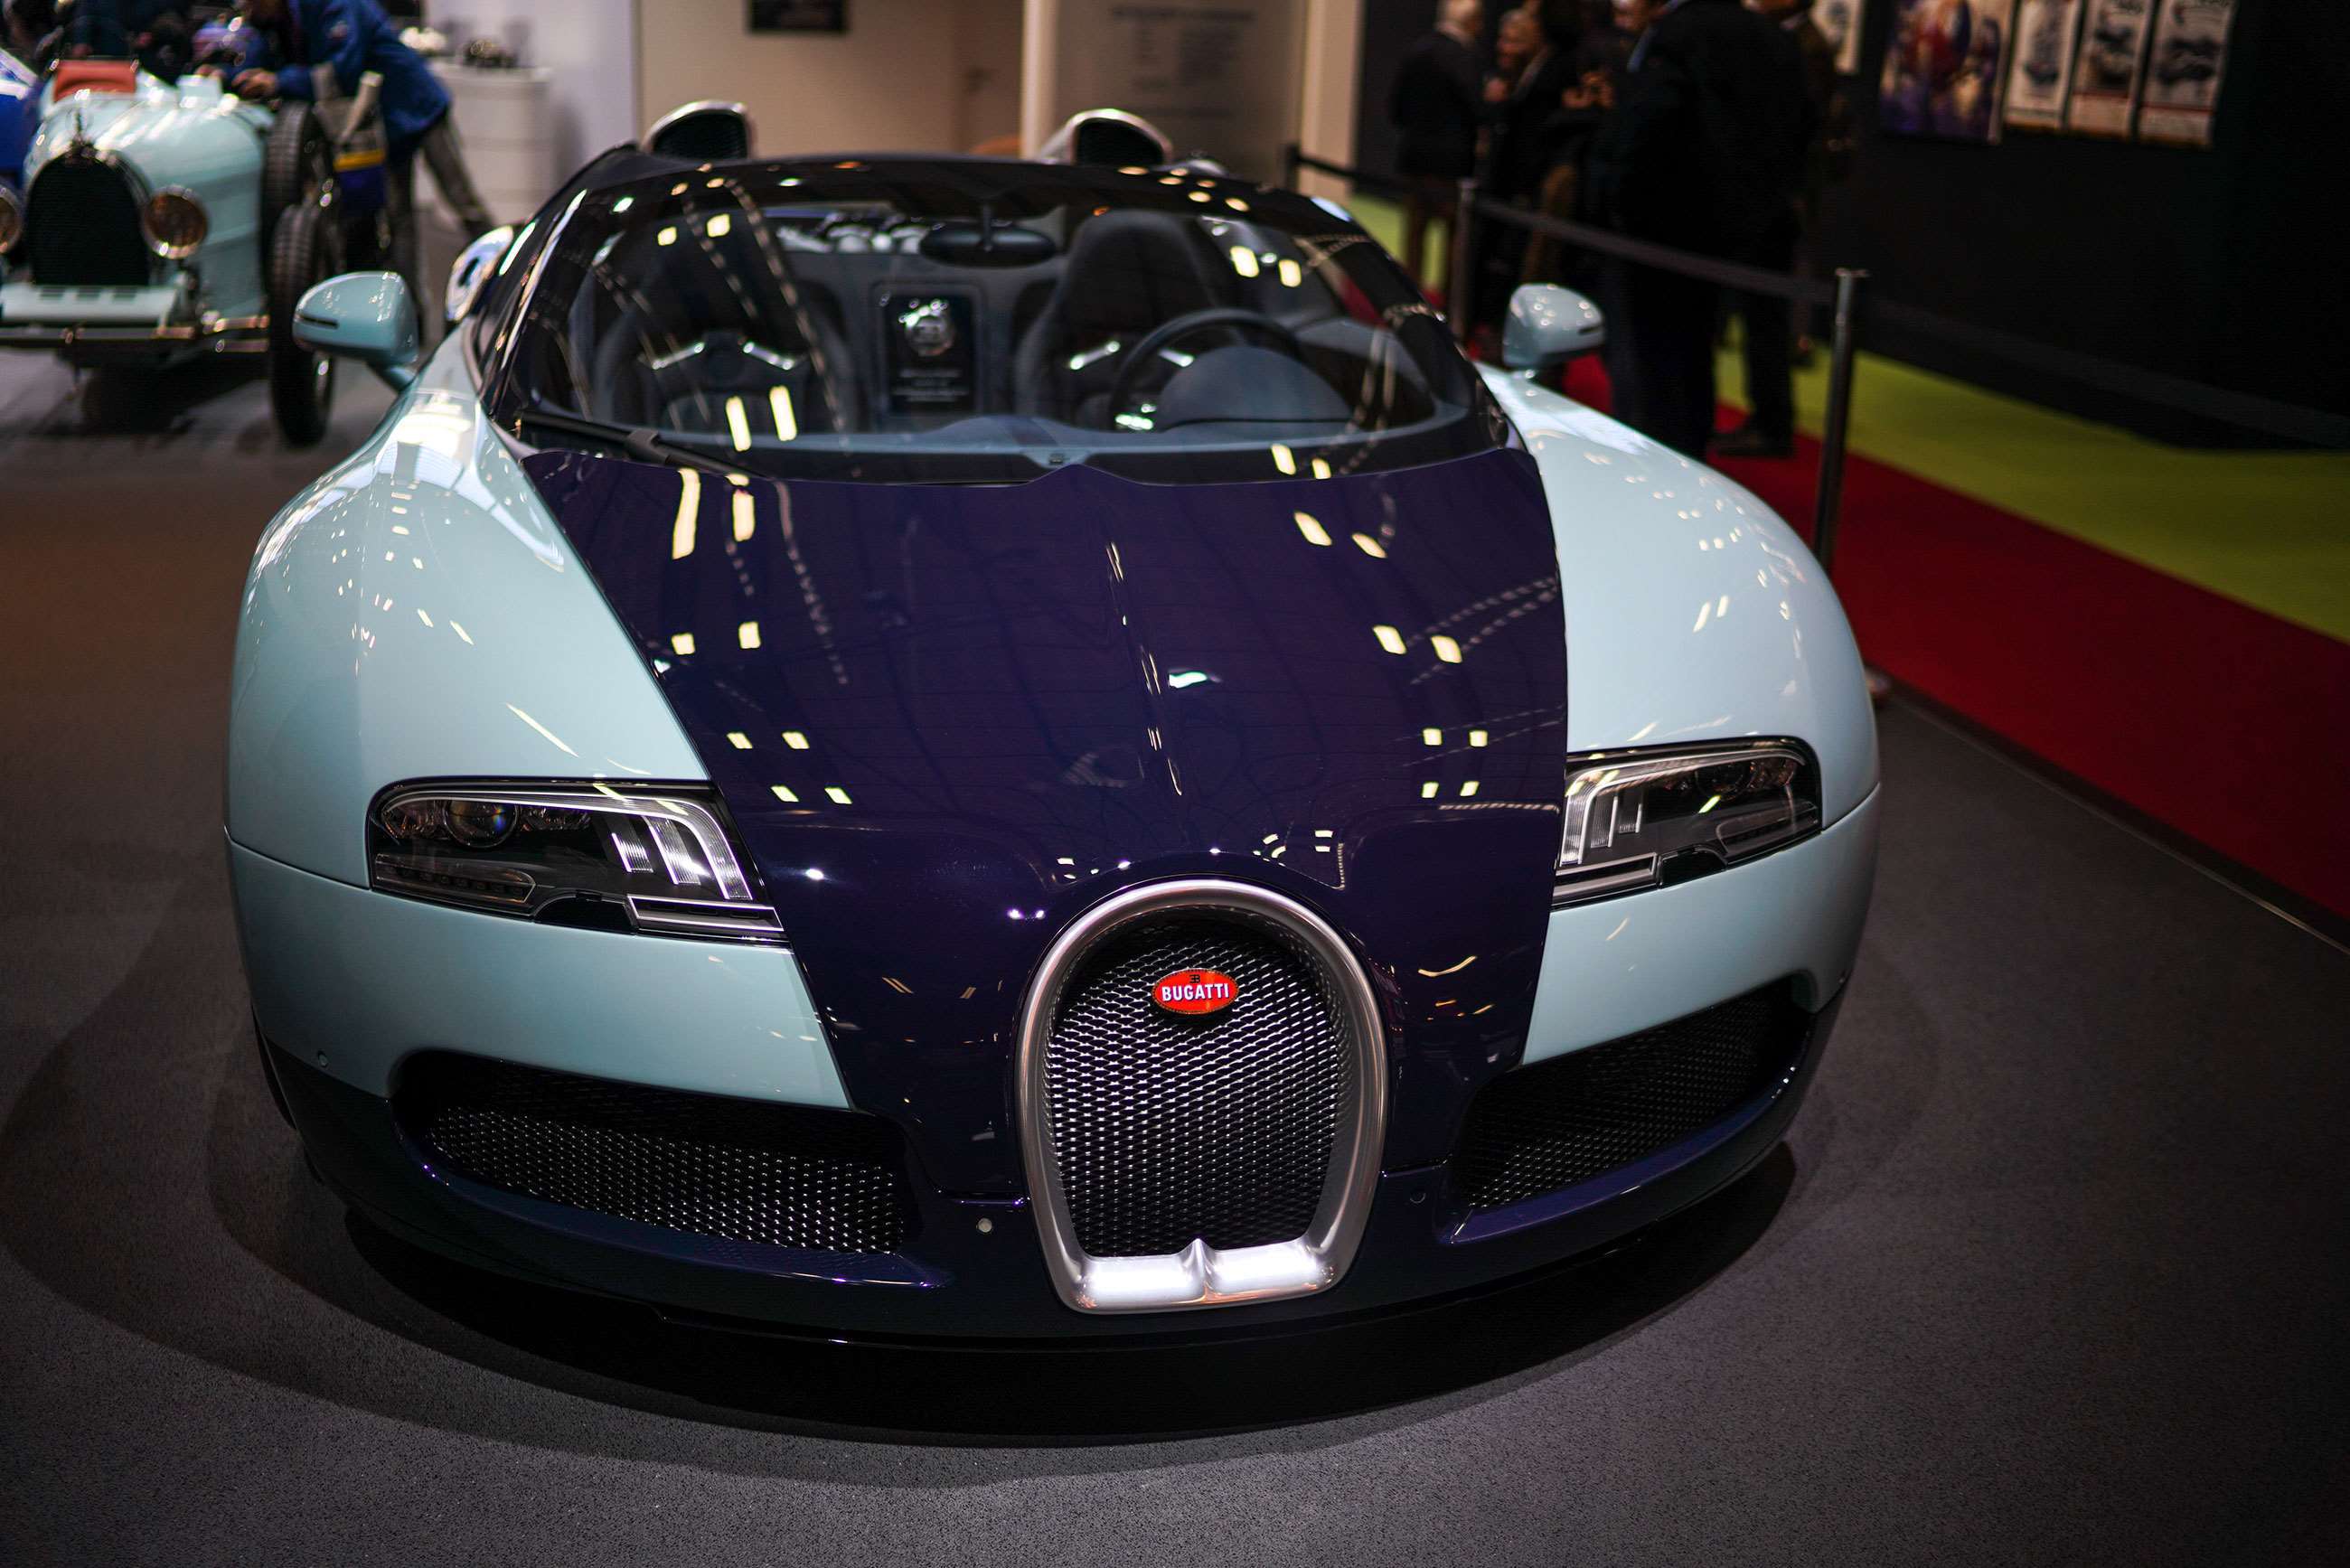 future-classics-bugatti-veyron-grand-sport-retromobile-2020-pete-summers-goodwood-12022020.jpg